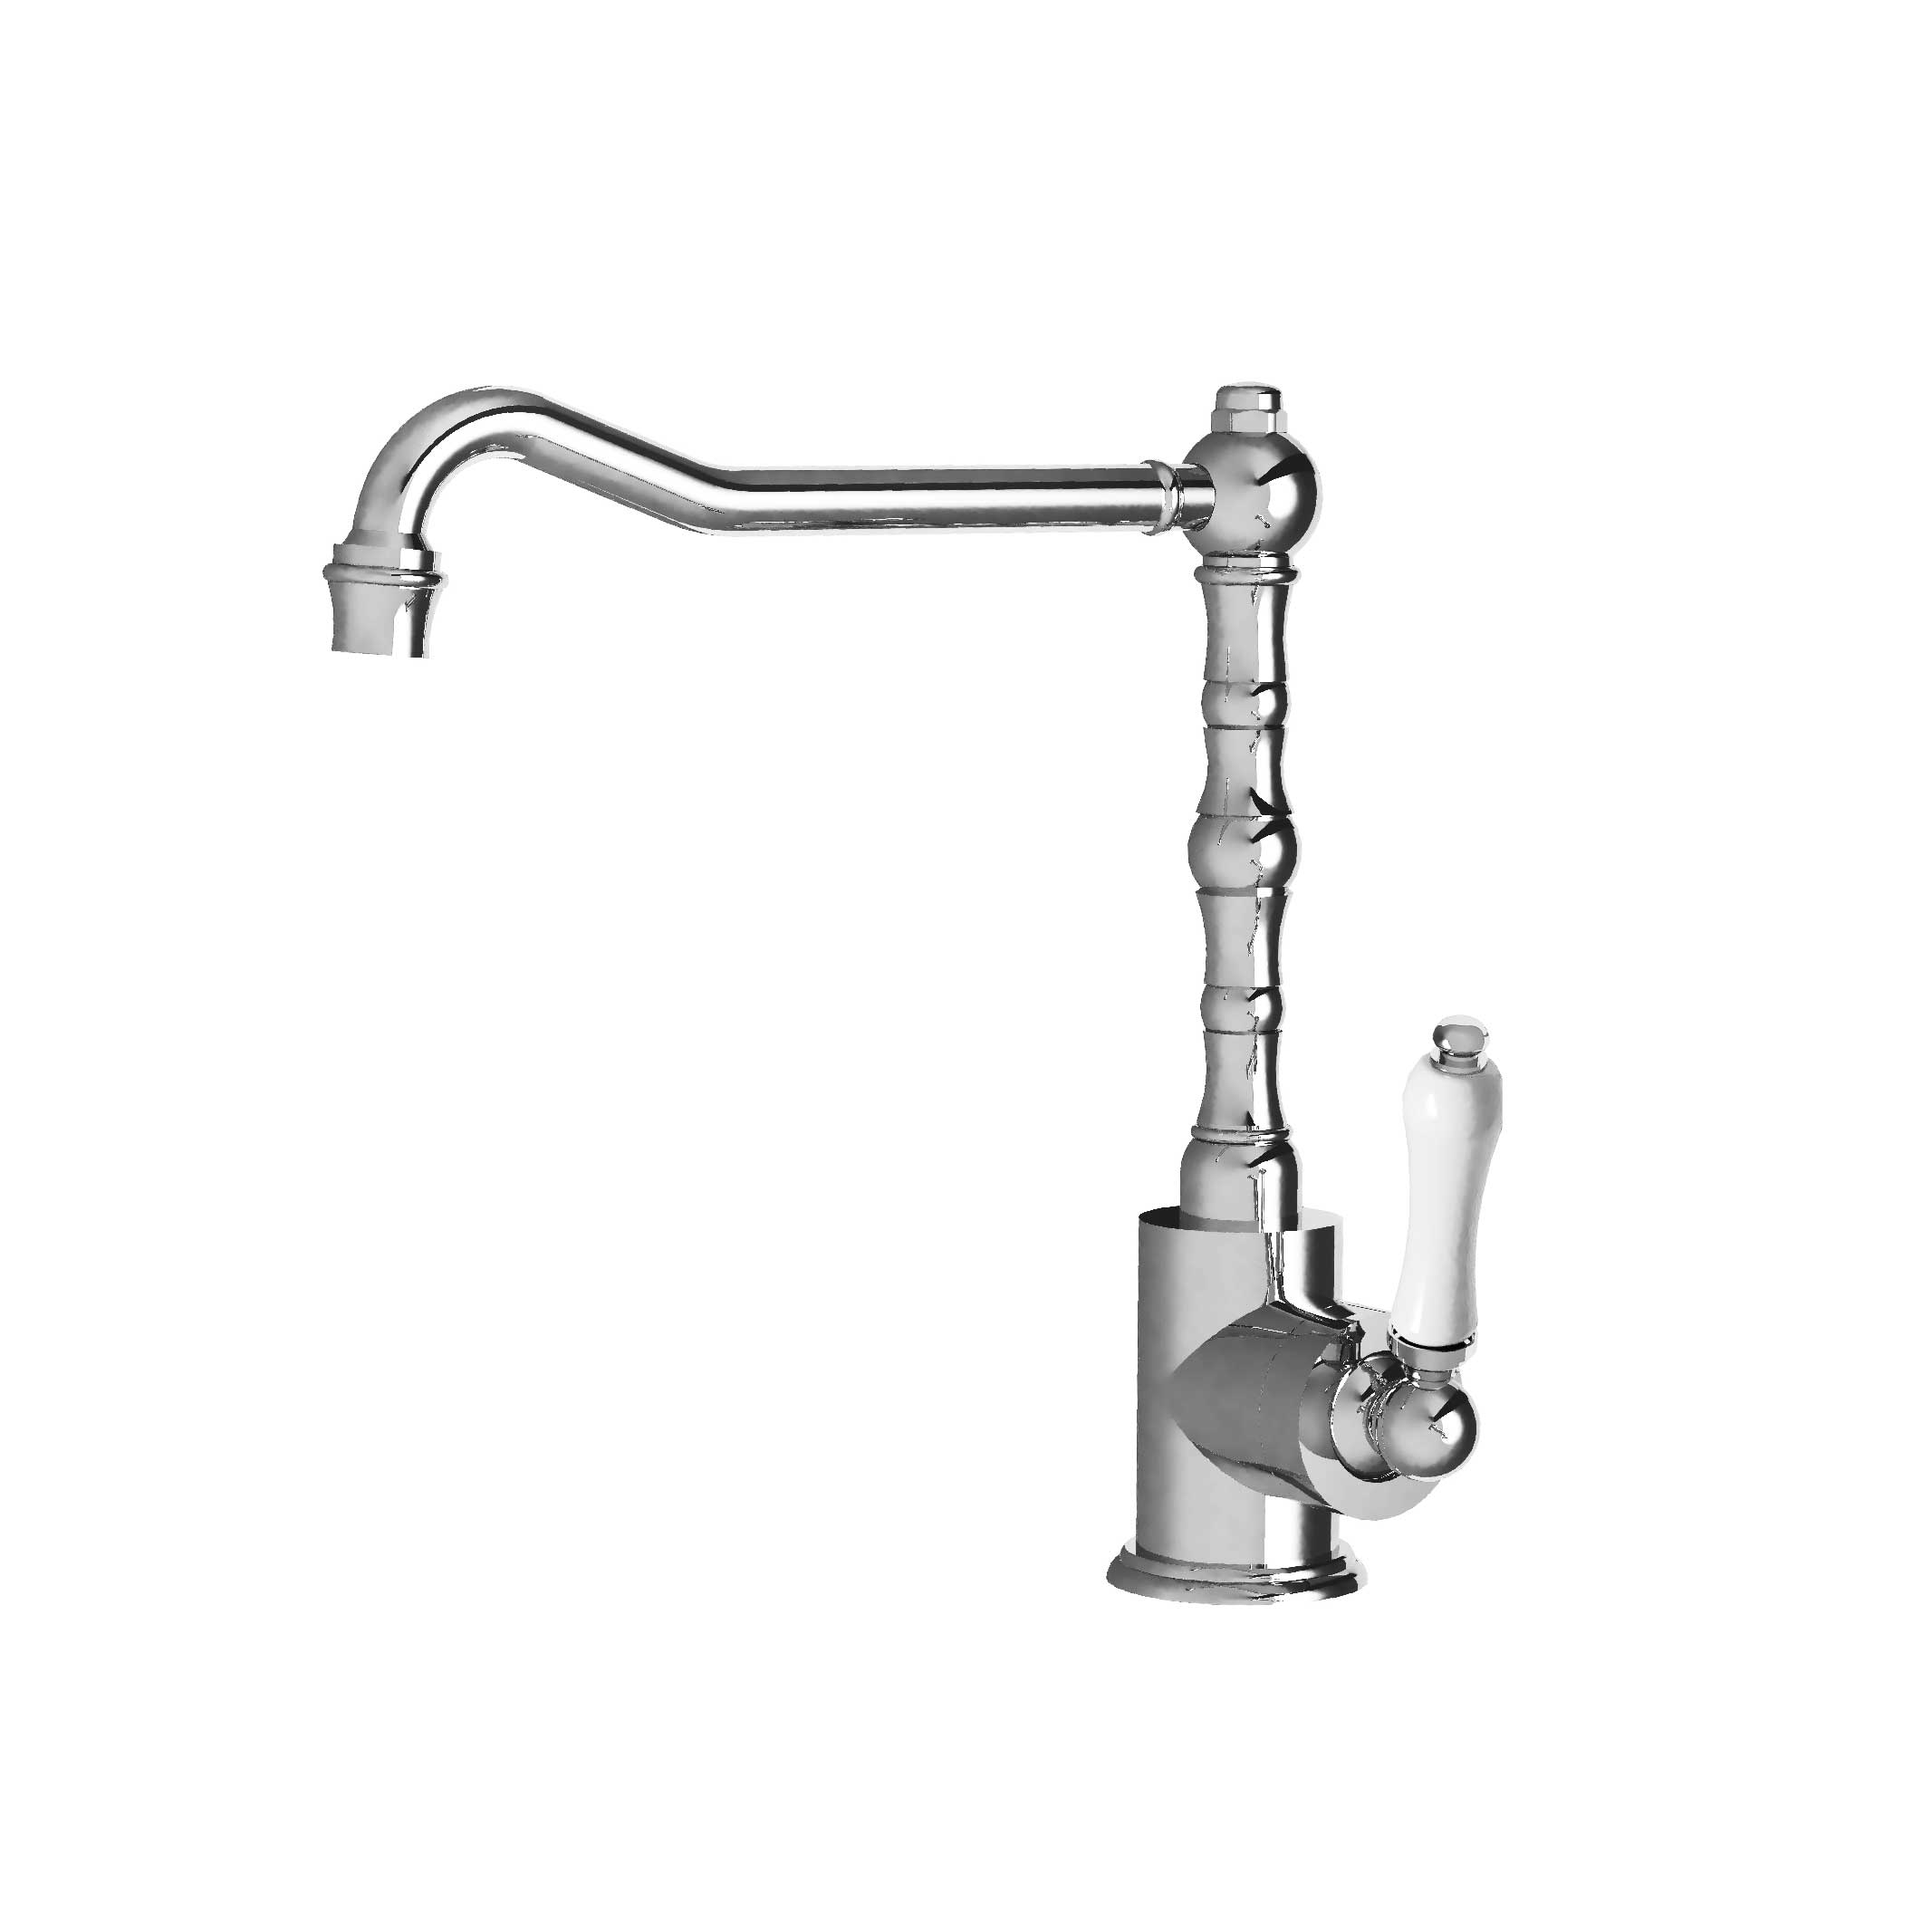 MK04-1101MB Single-hole kitchen lever mixer